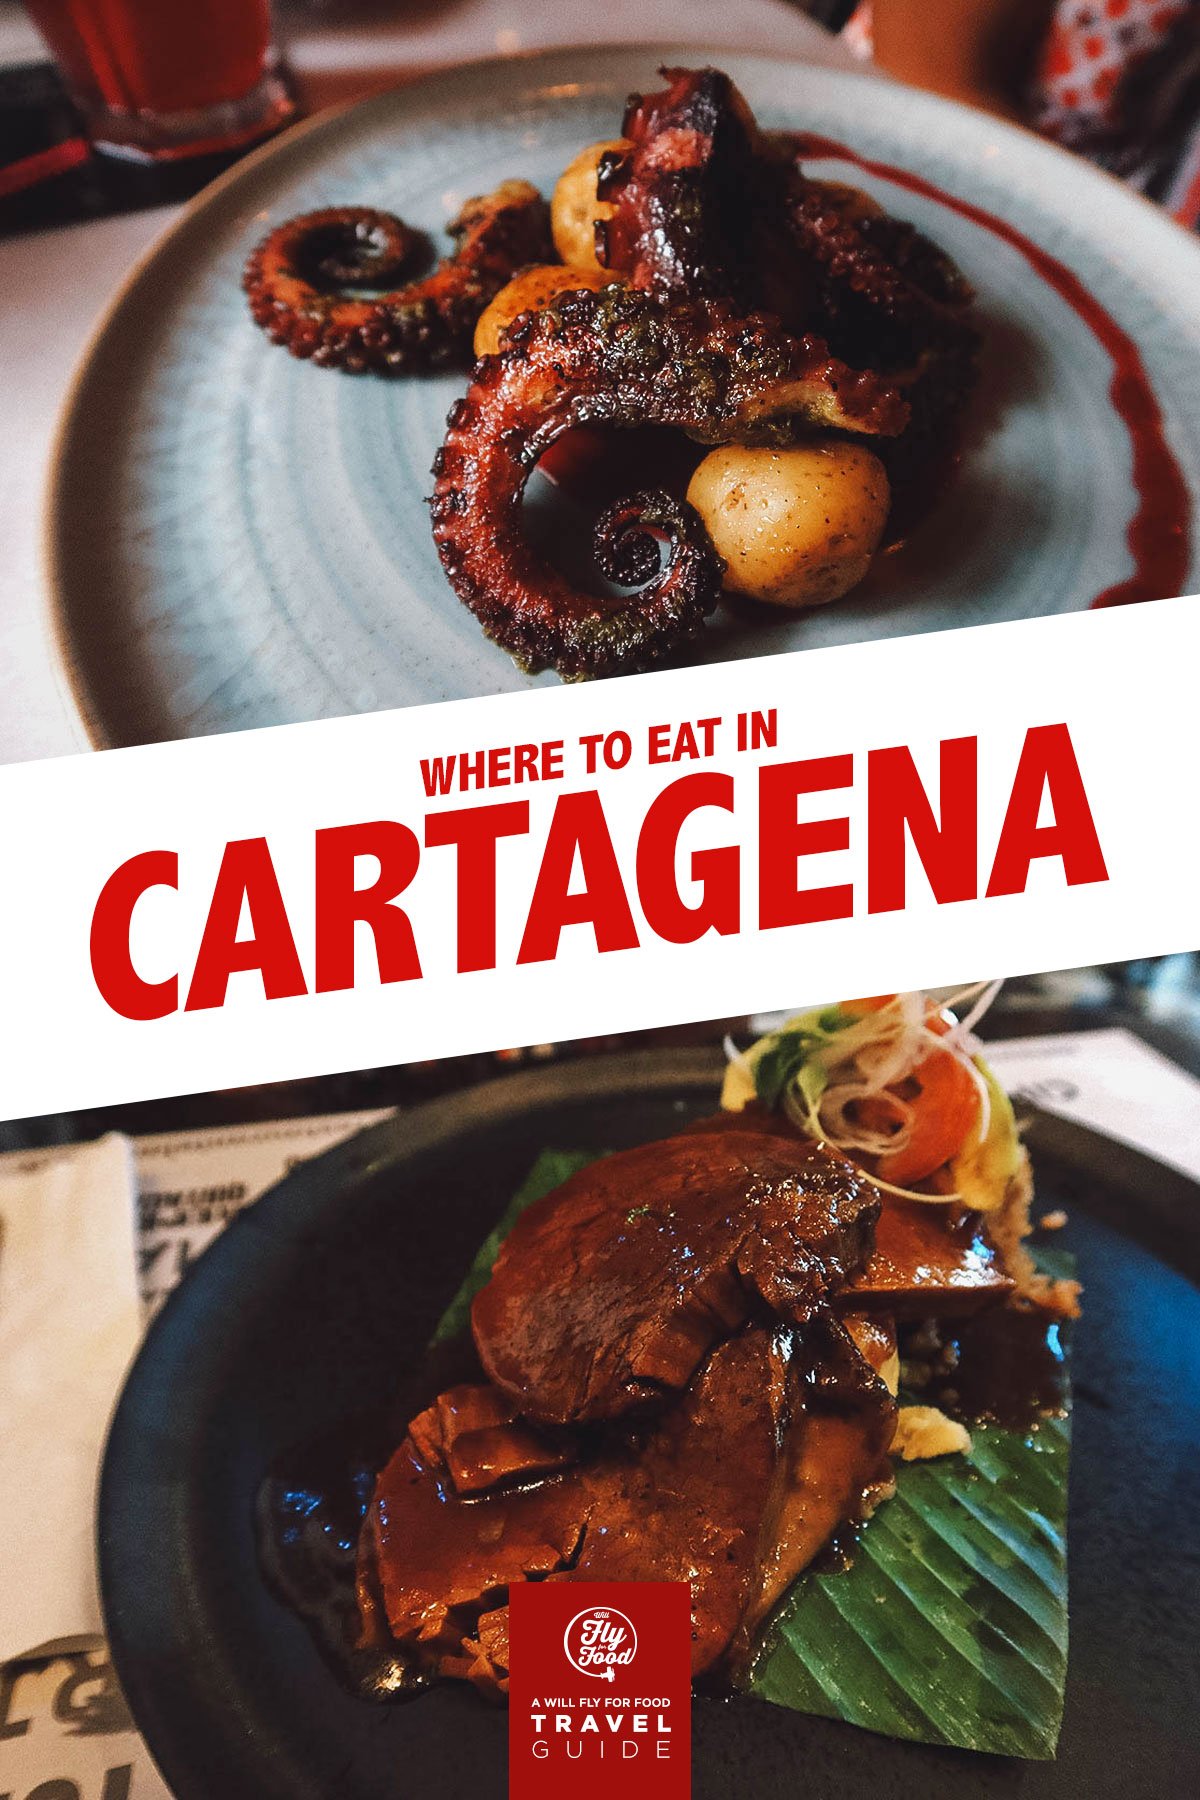 Octopus and posta cartagenera dishes at a restaurant in Cartagena